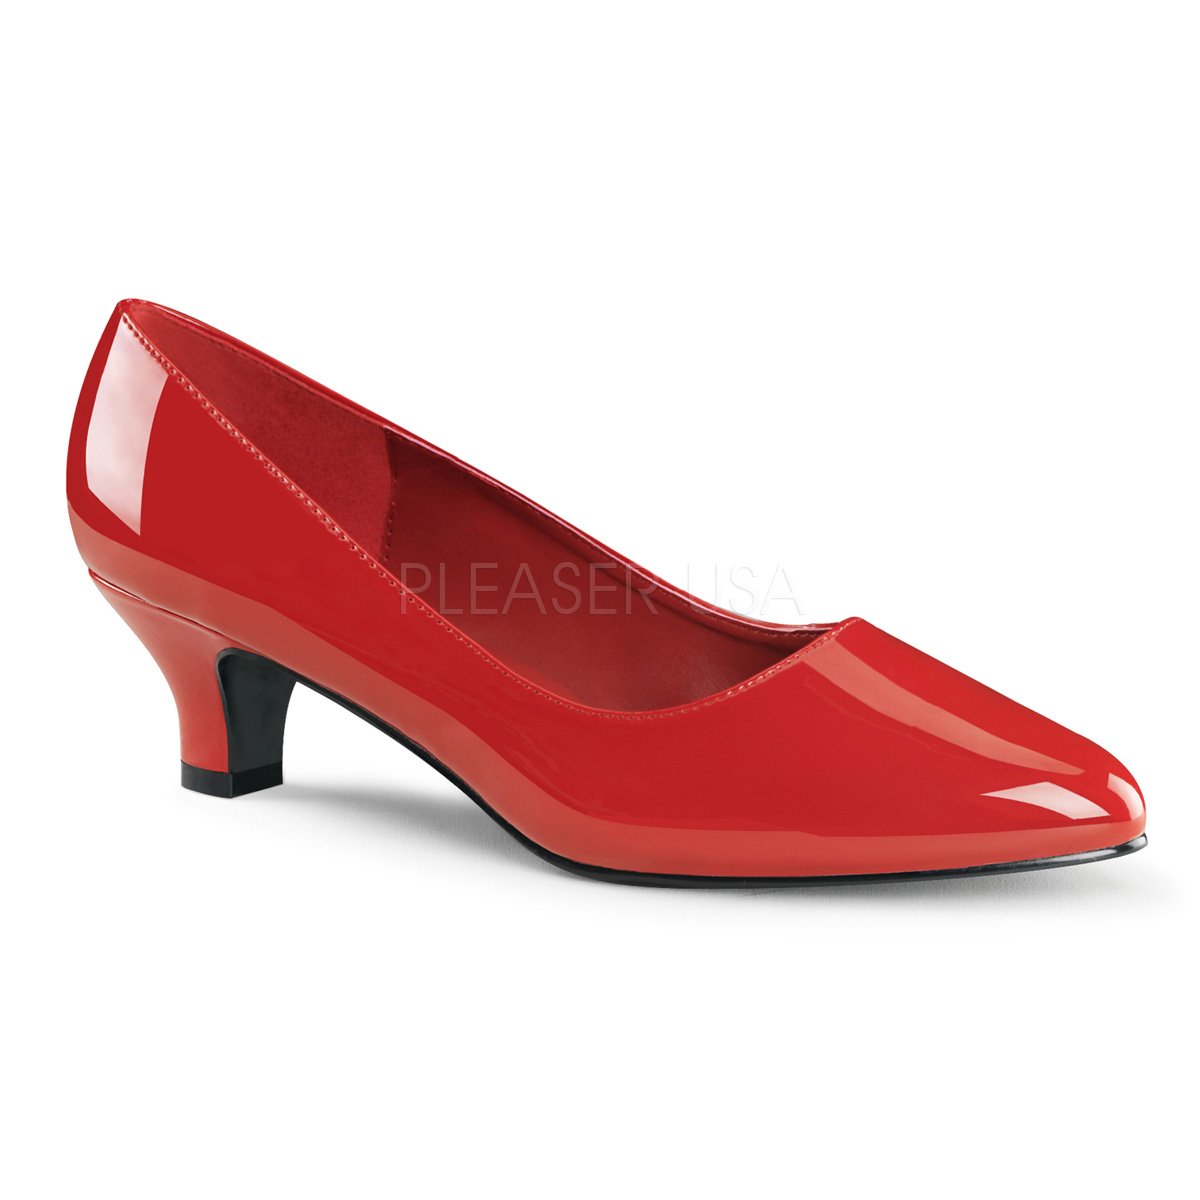 Pleaser CLASSIQUE-01 4 Inch Heel Nude Patent Peep Toe Slide – Shoecup.com